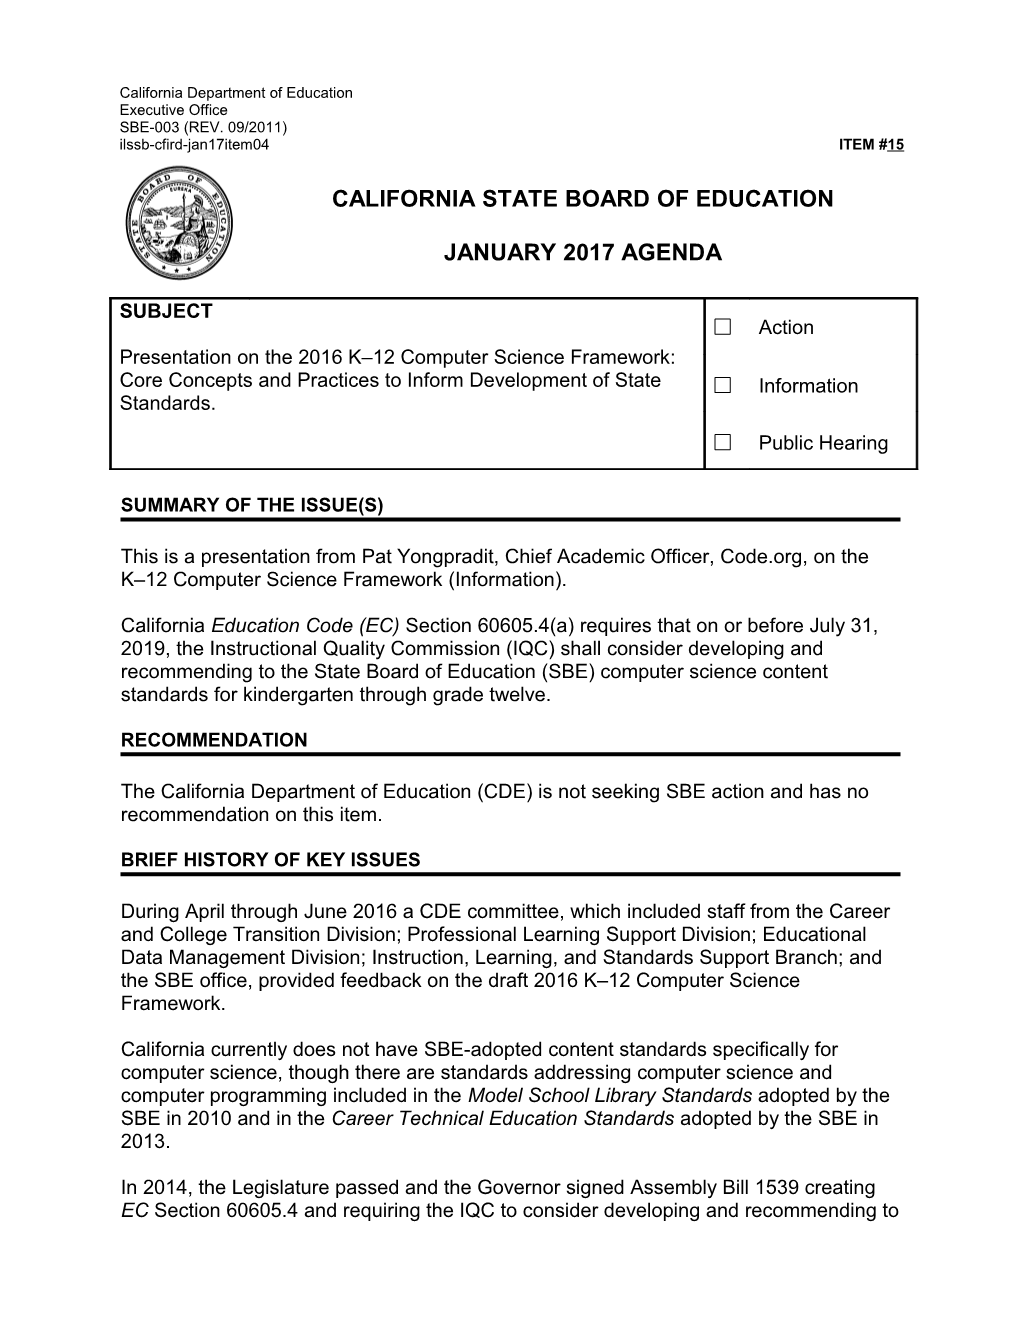 January 2017 Agenda Item 15 - Meeting Agendas (CA State Board of Education)